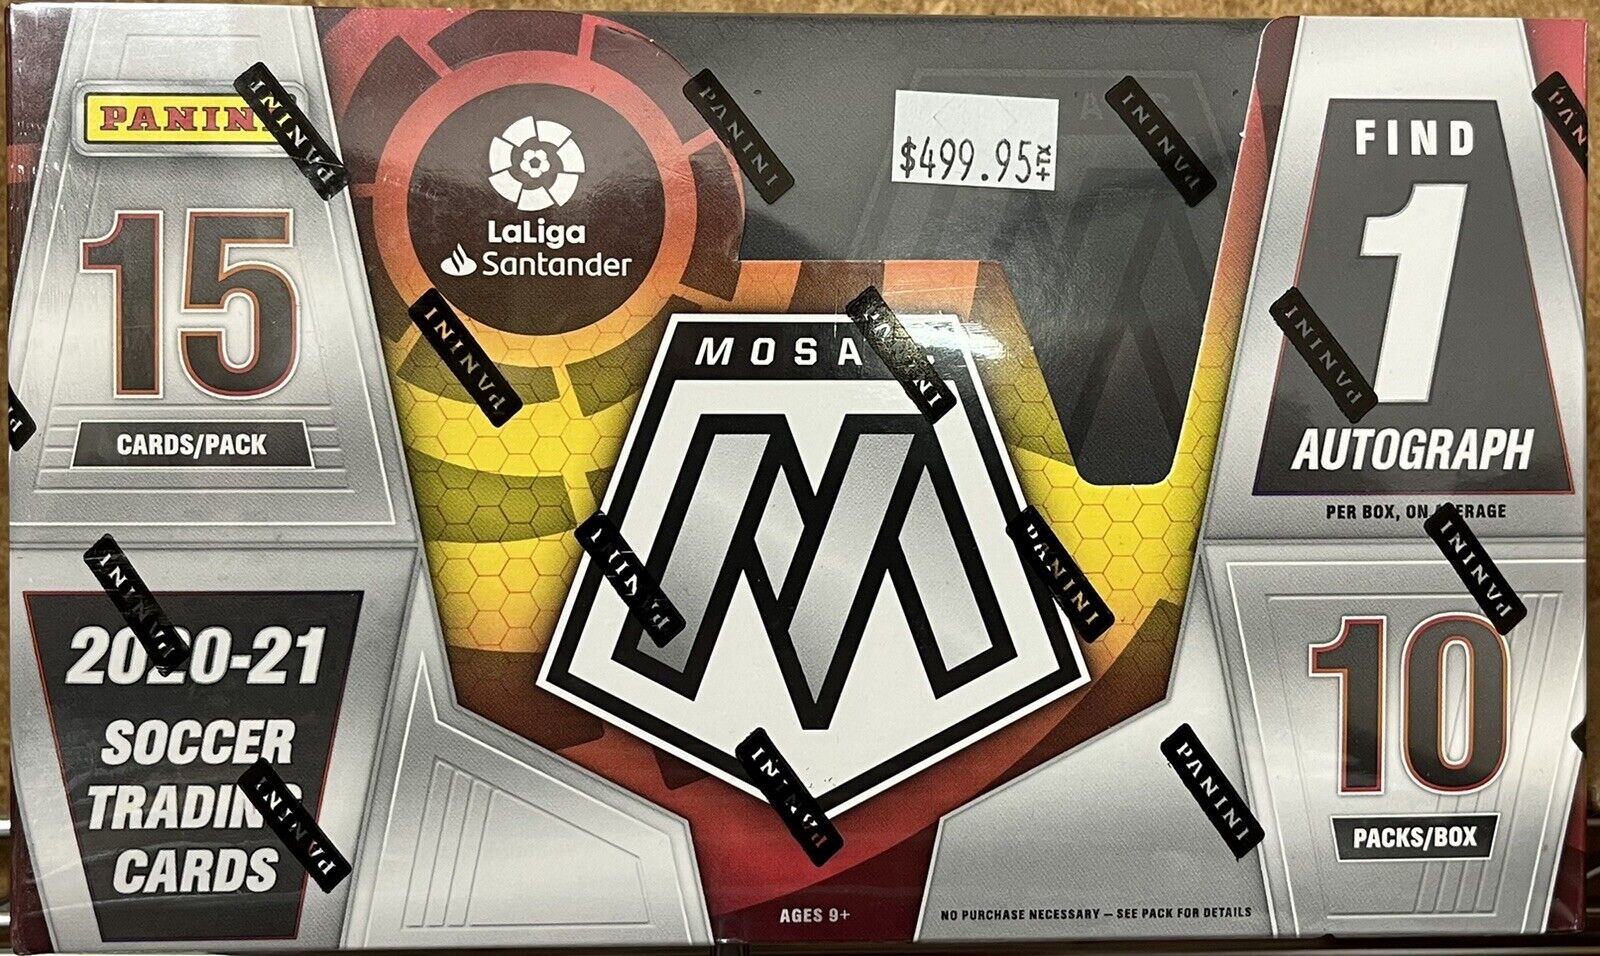 2020-21 Panini Mosaic LaLiga Soccer Hobby Box (10 Packs/15 Cards